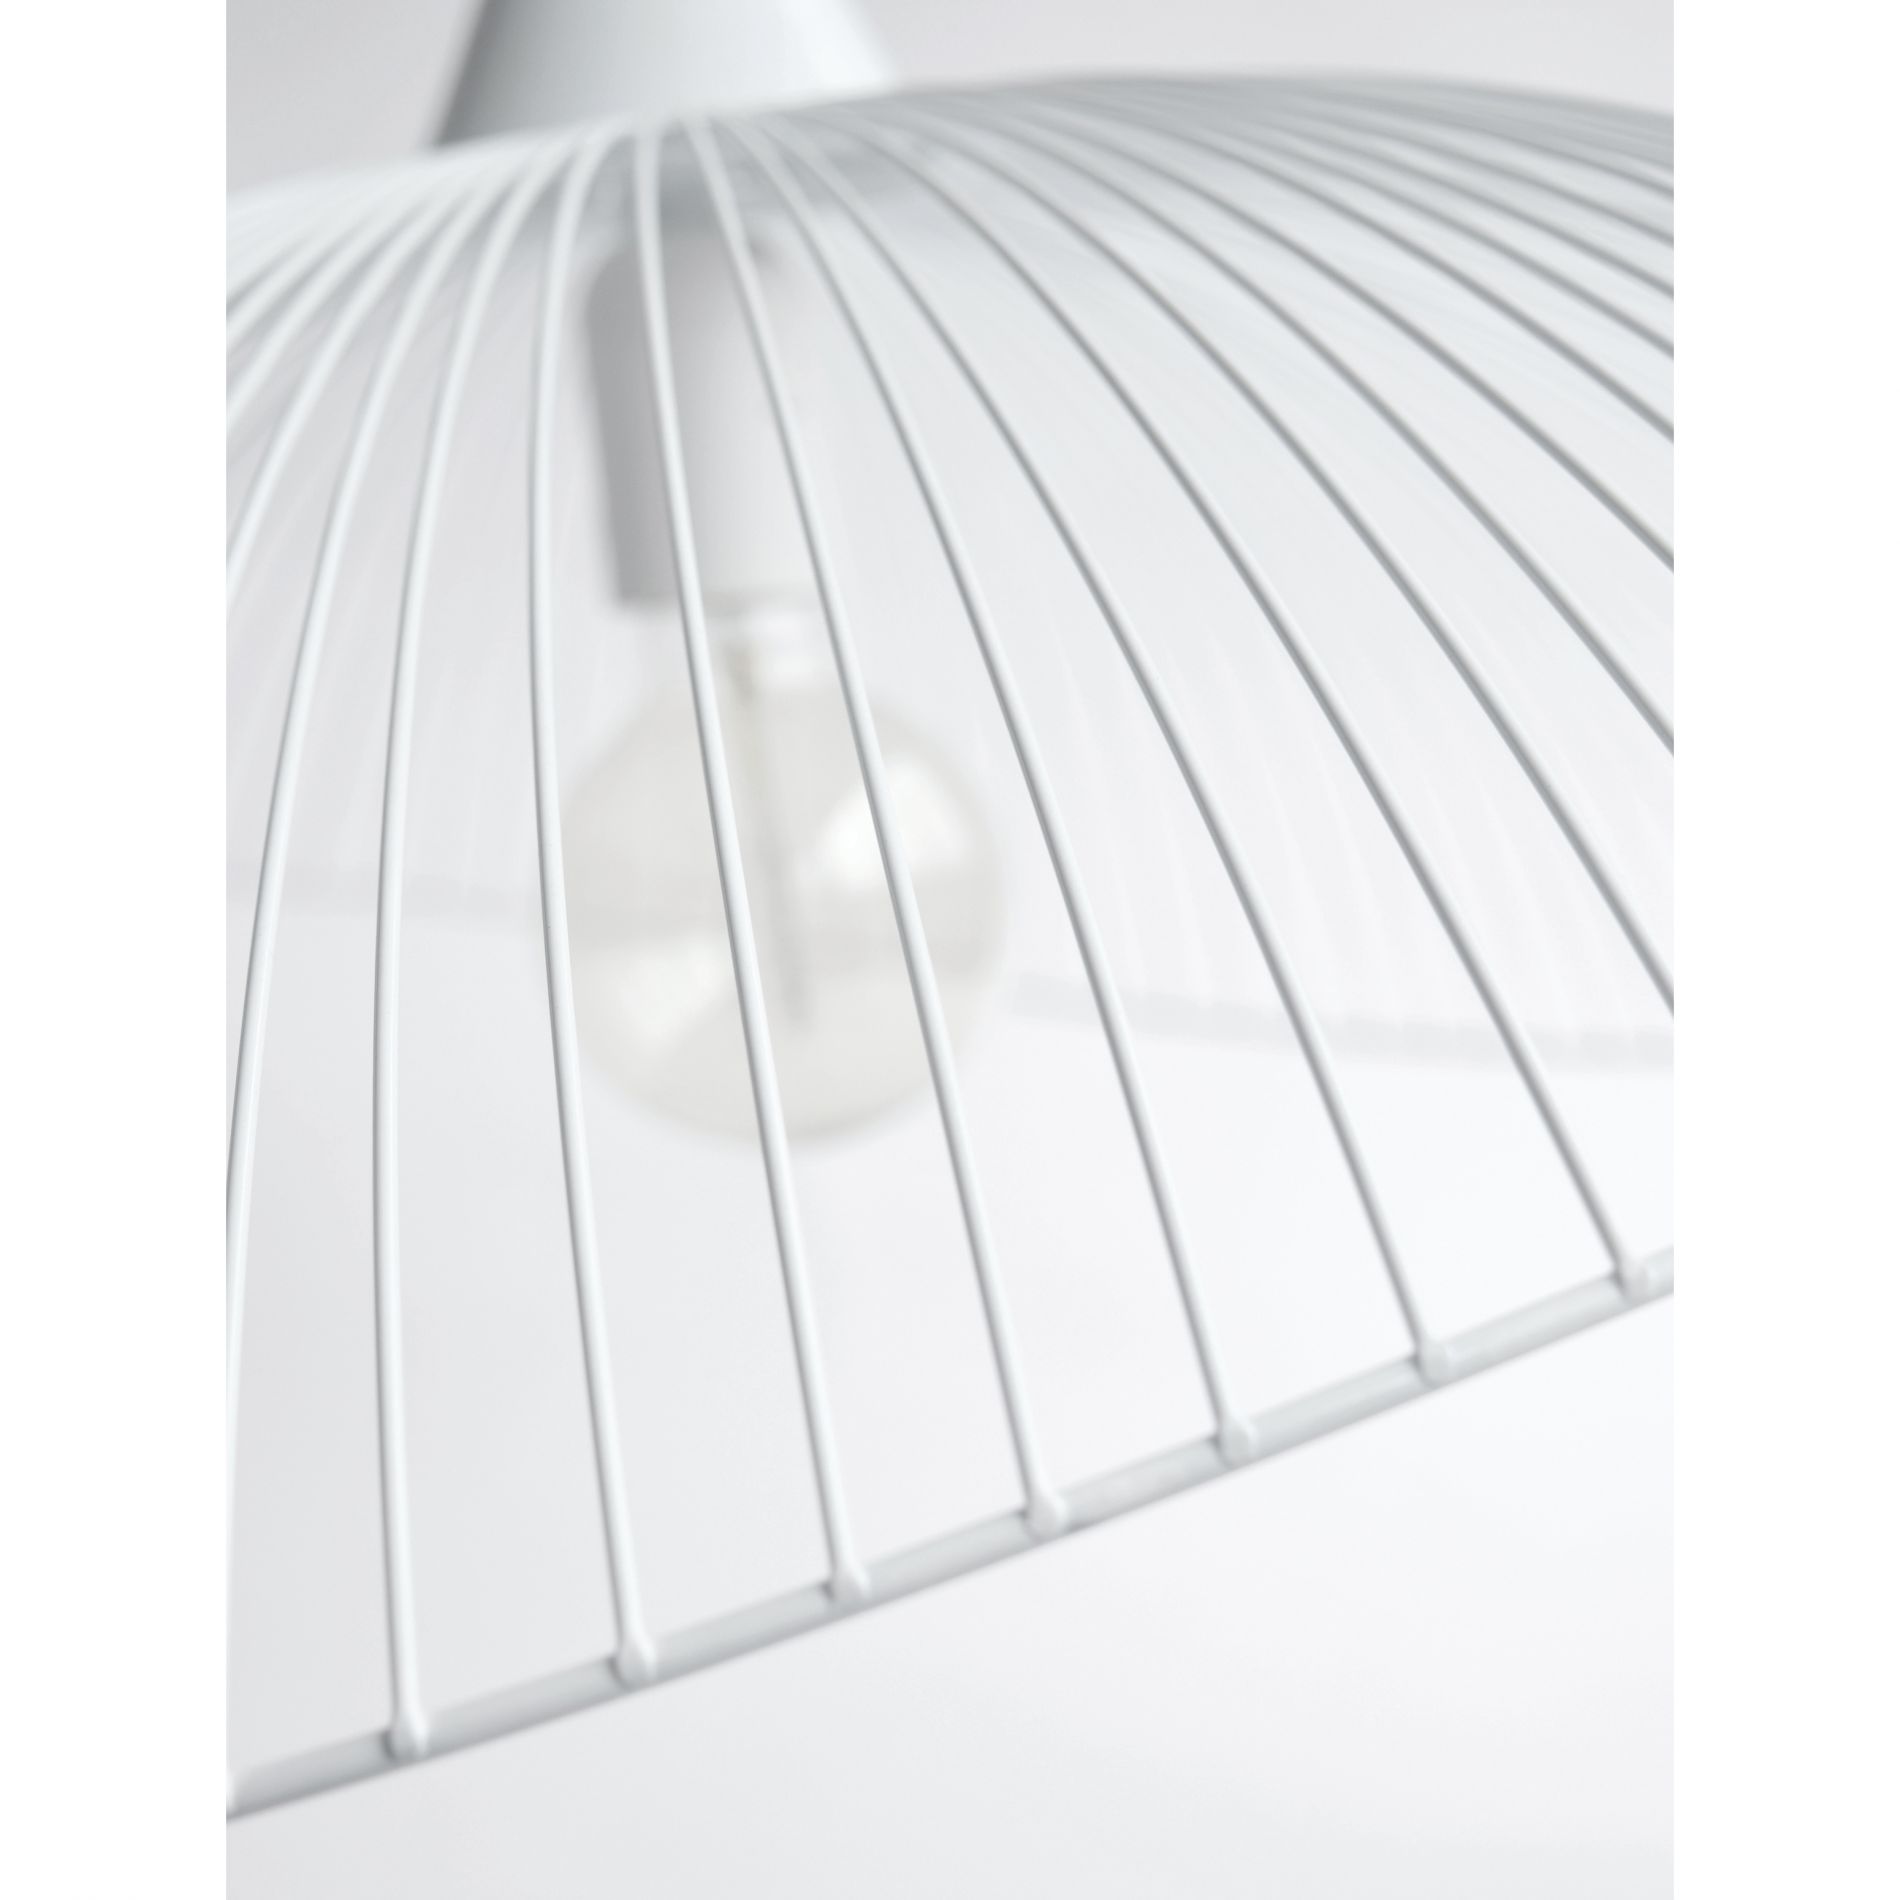 Suspension XXL design filaire SAWYER en métal blanc